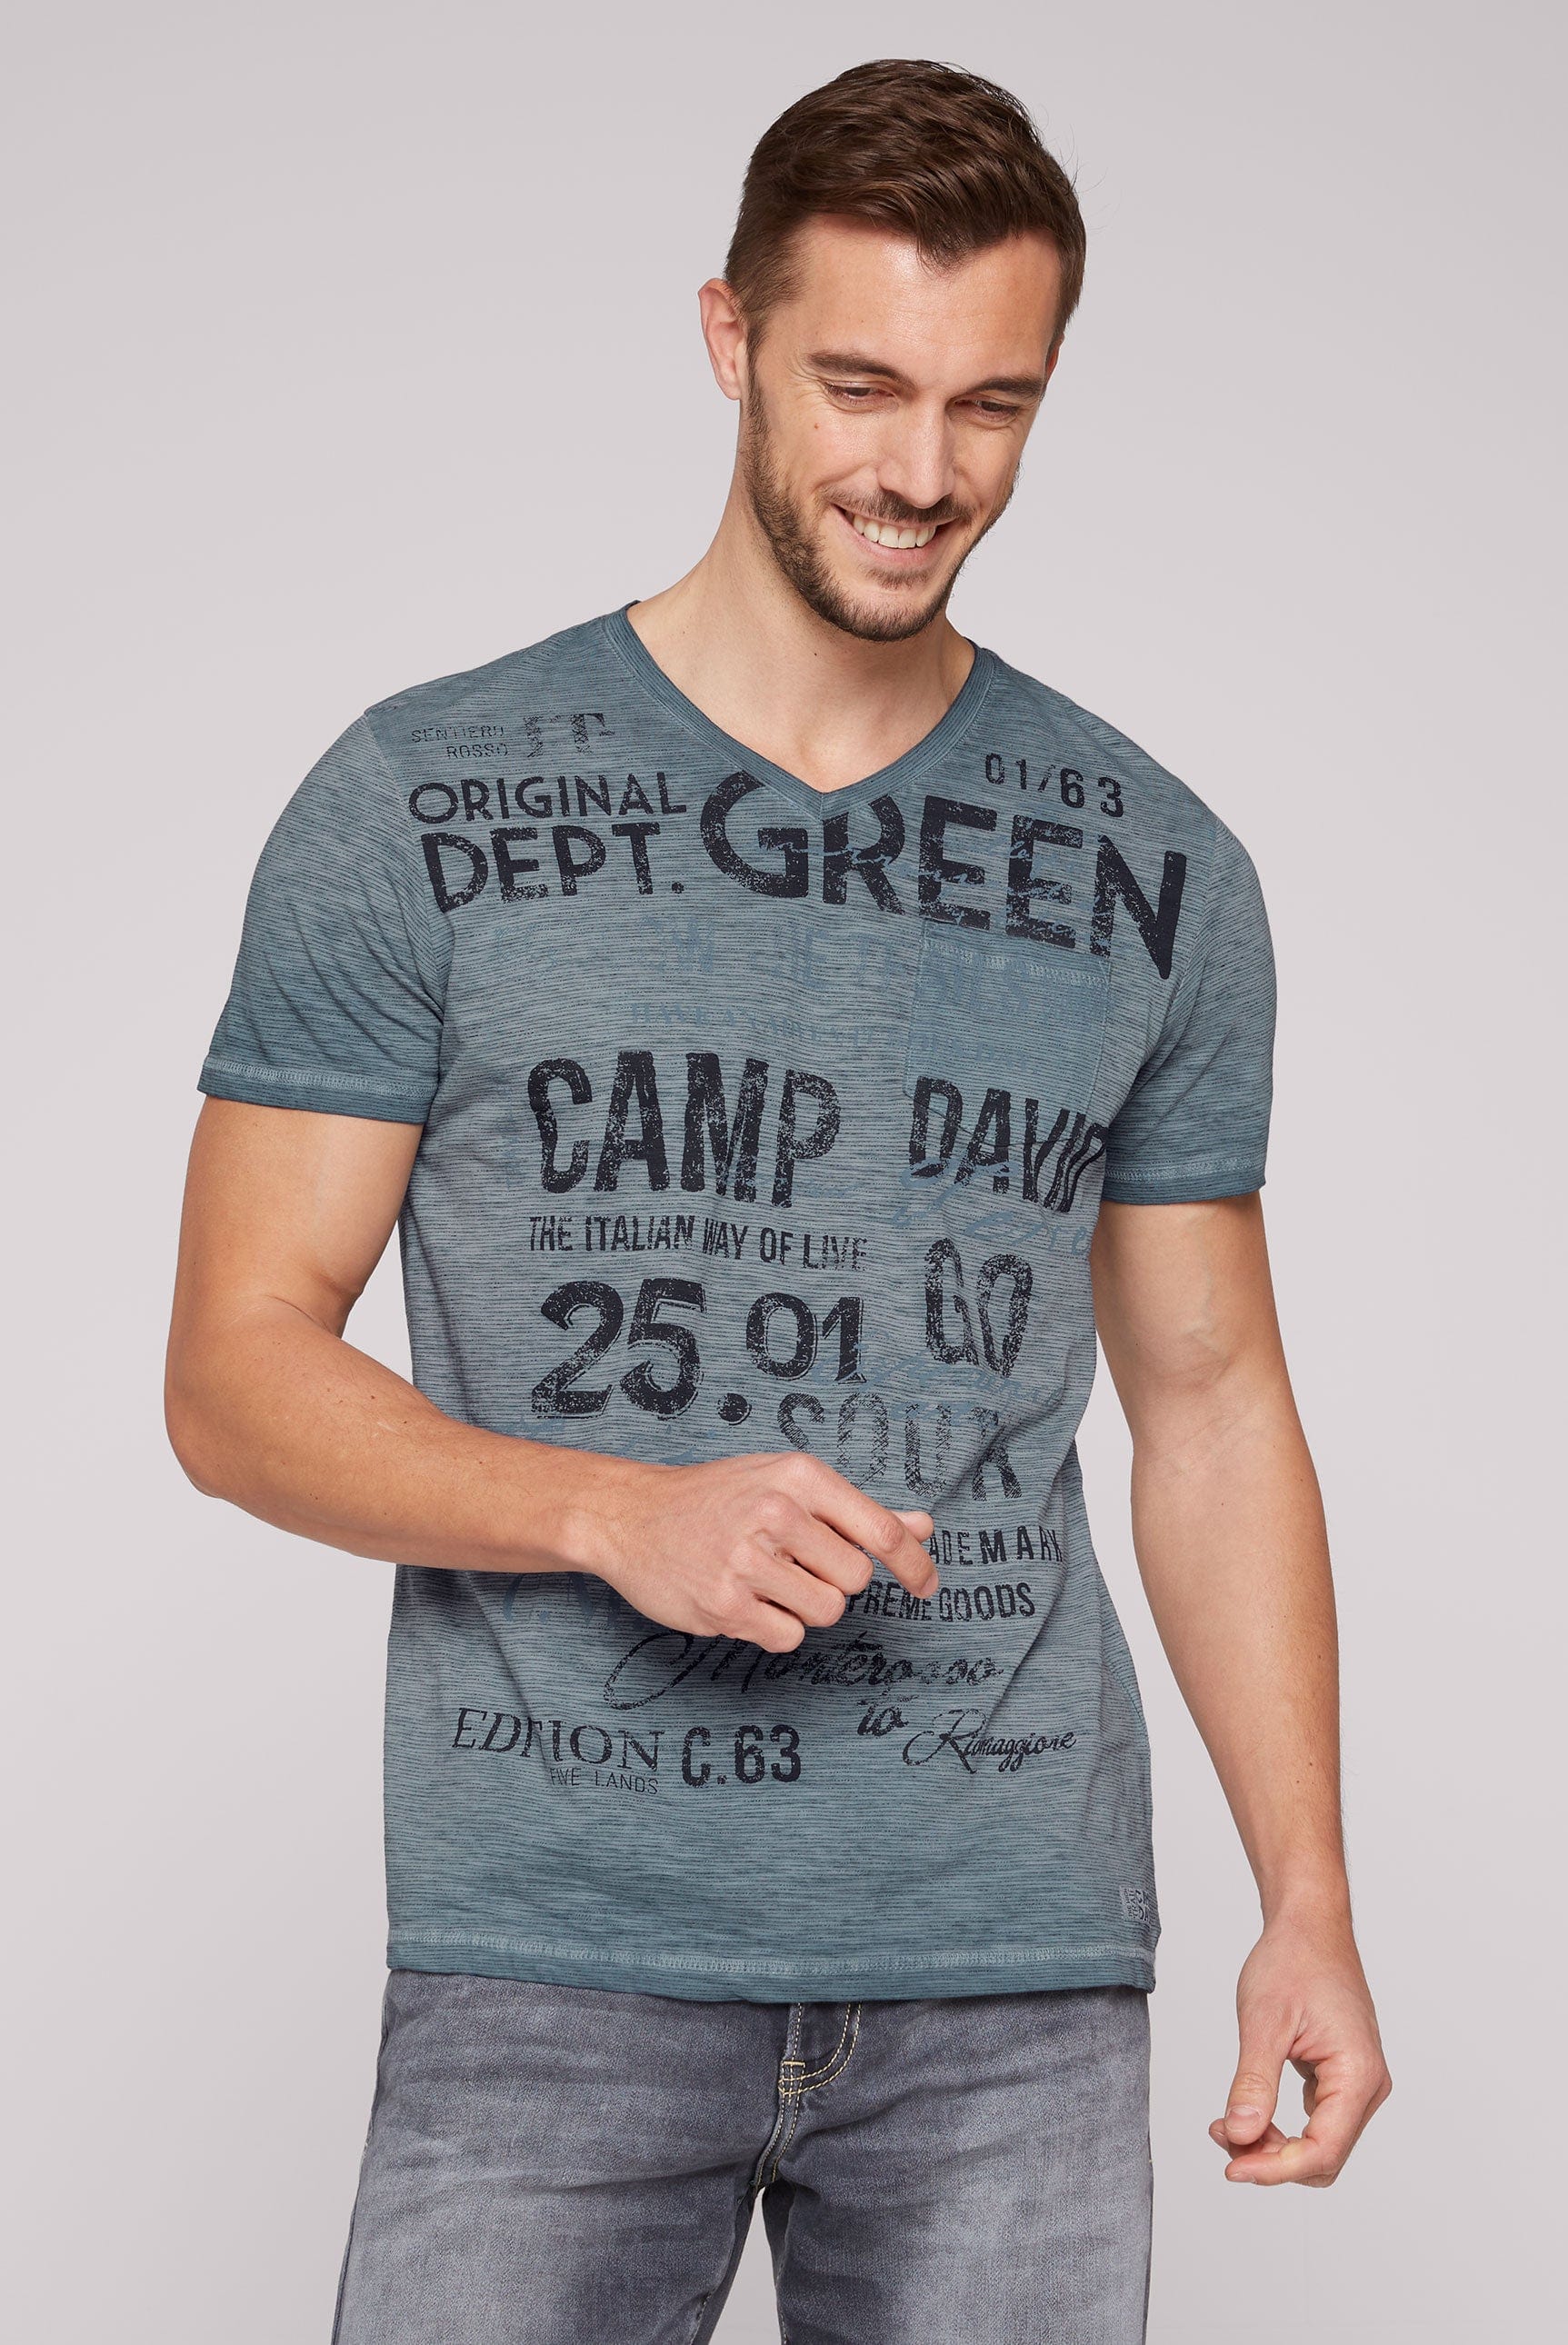 Camp David T-Shirts: Quality and | Versatility Fashion Stateshop